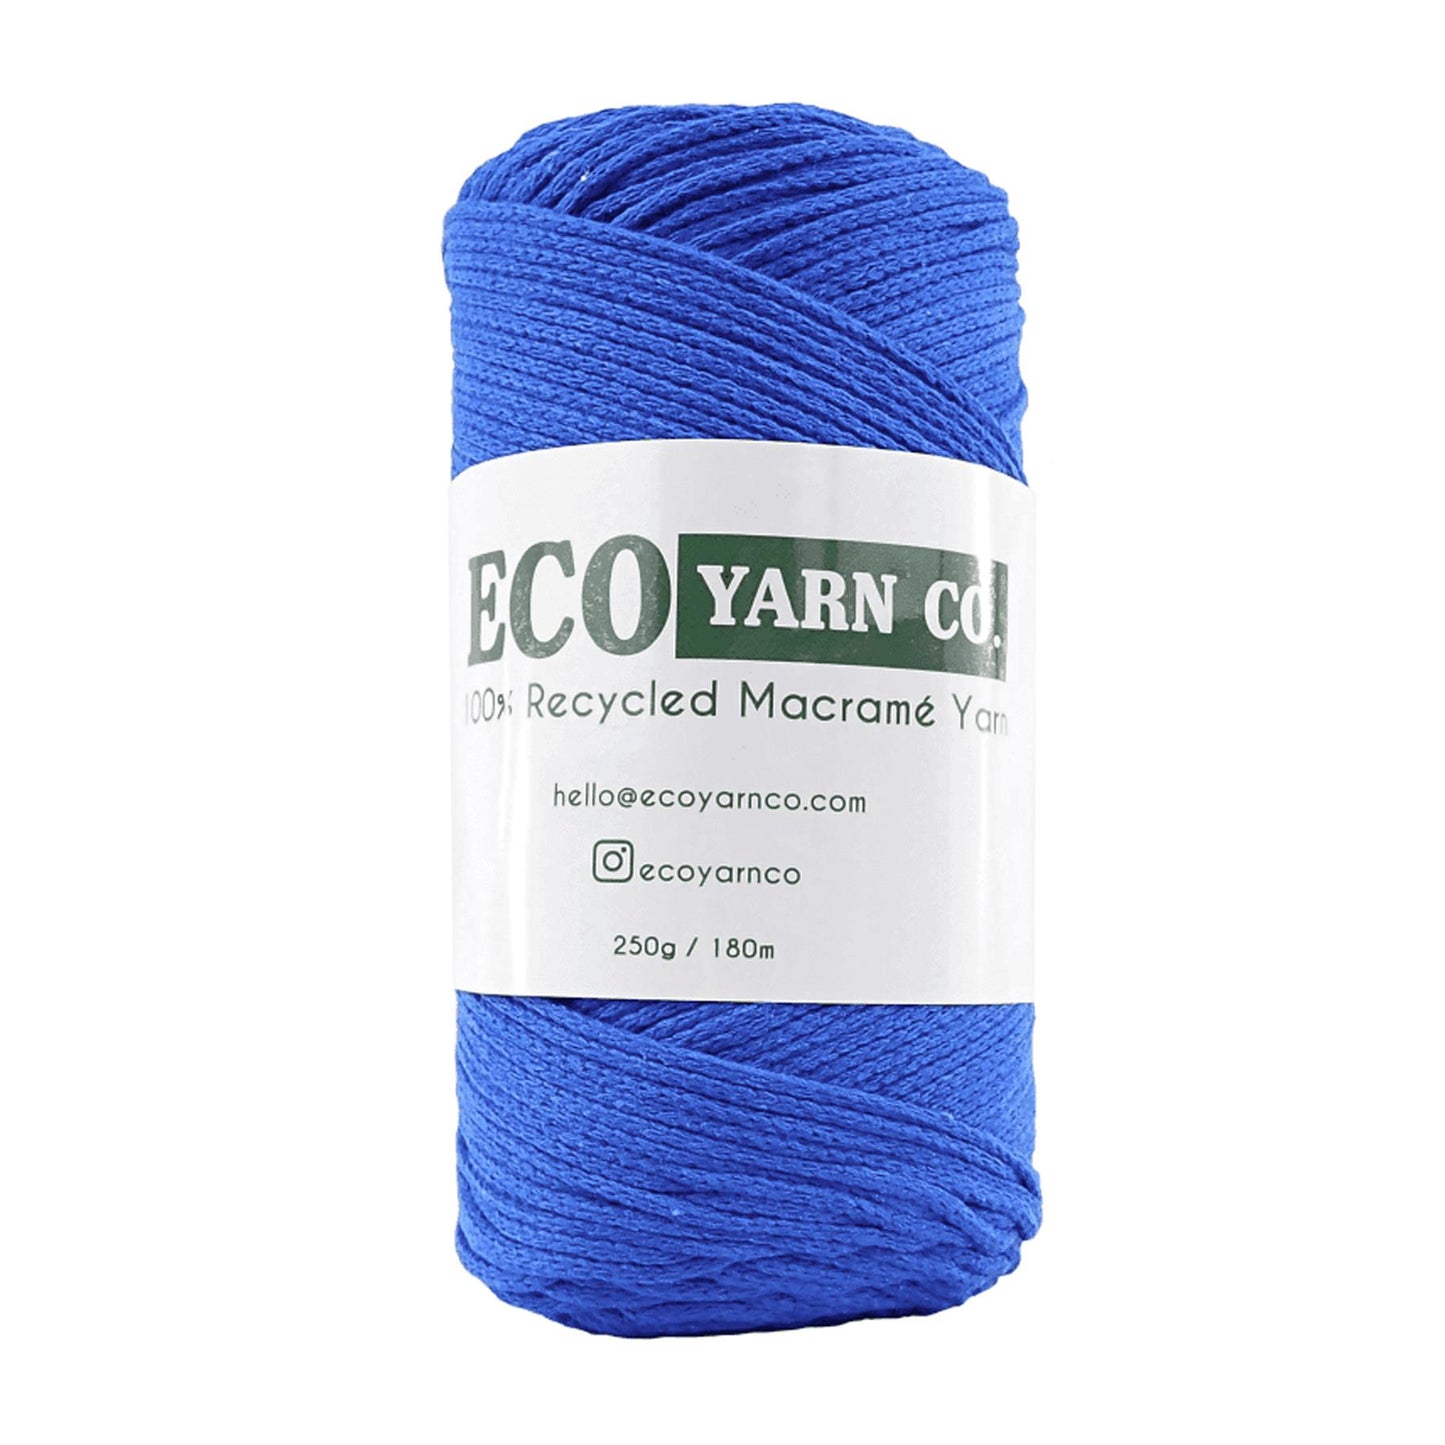 [Eco Yarn Co] Flair Blue Cotton/Polyester Macrame Yarn - 180M, 250g